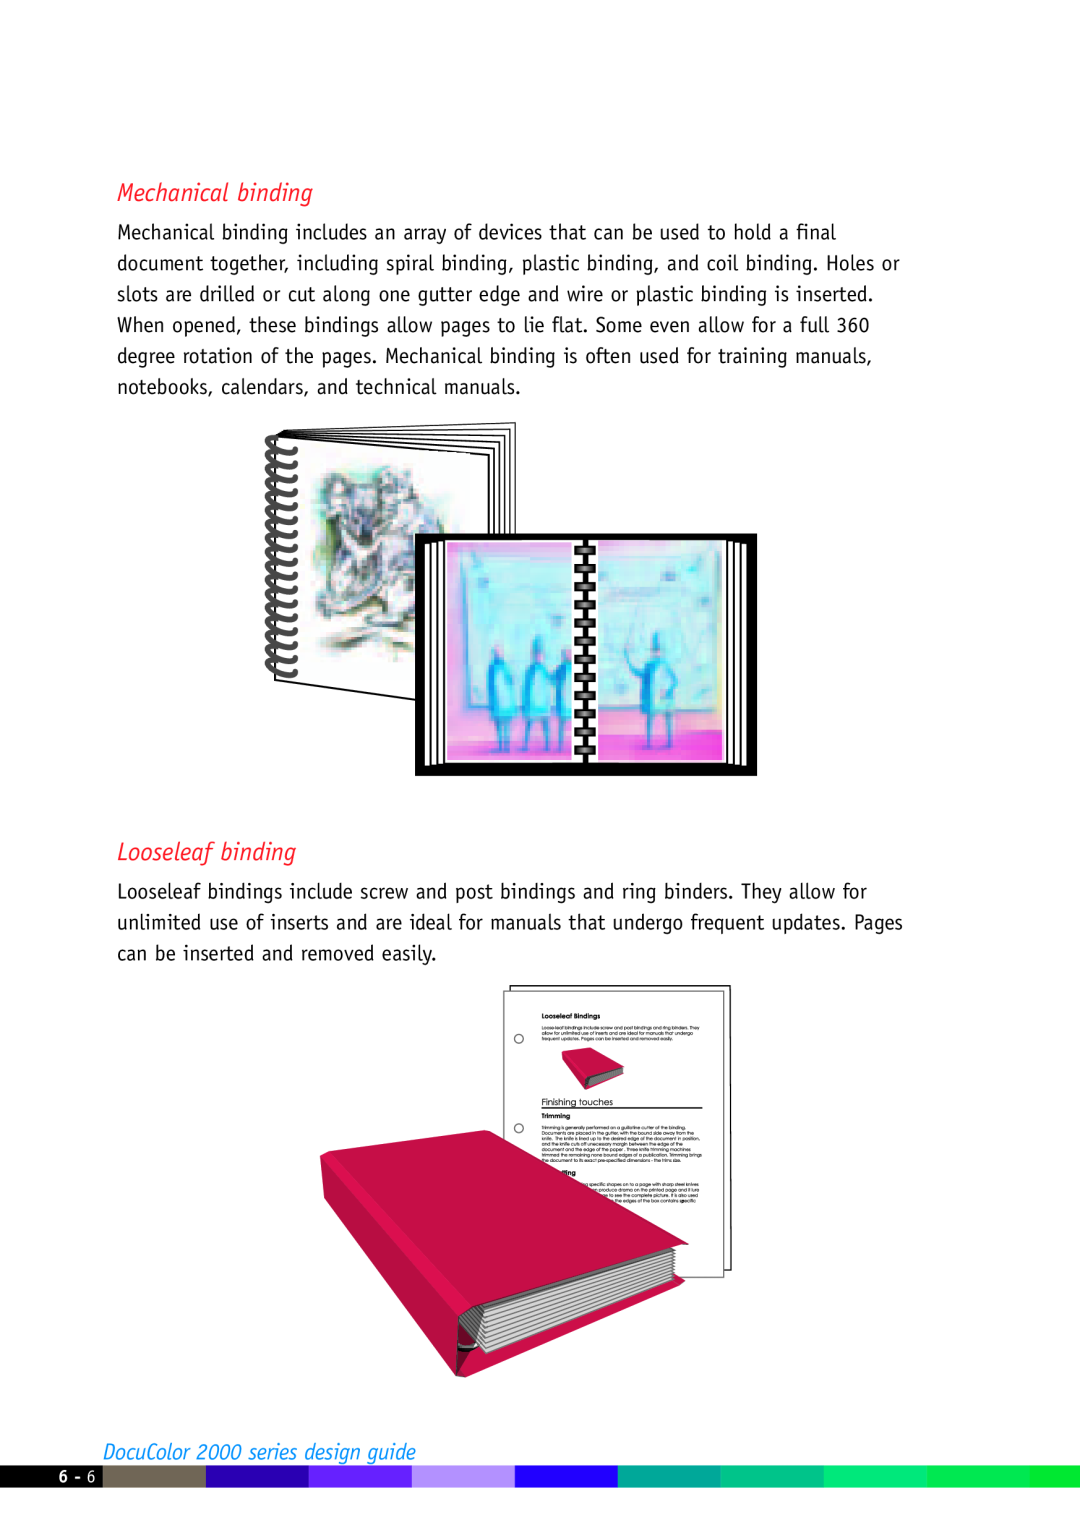 Xerox manual Mechanical binding, Looseleaf binding, DocuColor 2000 series design guide 